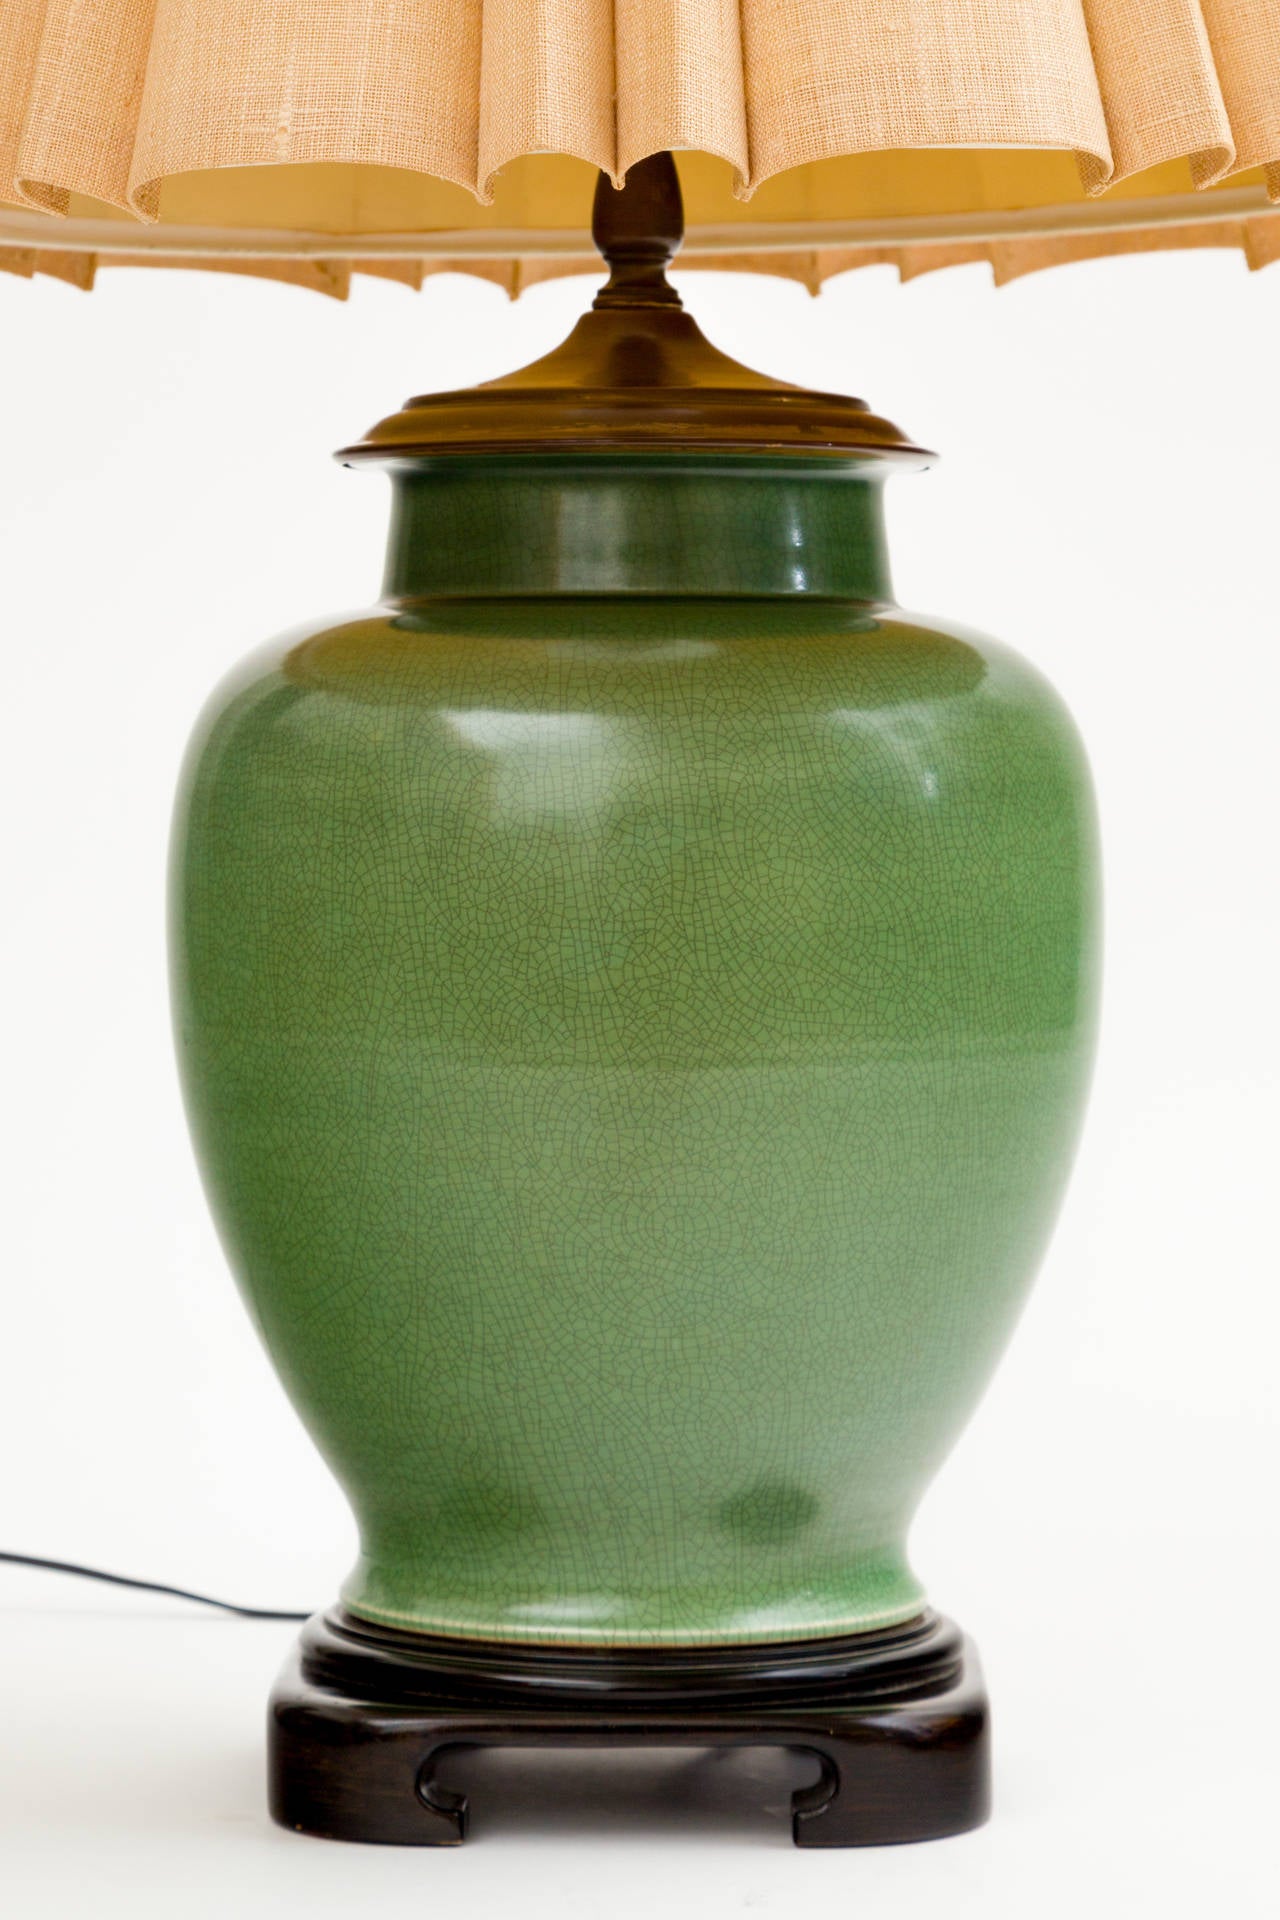 Jade-Keramik-Ingwer-Glas-Lampe auf ebonisiertem Holzsockel. 
Chinesisches 